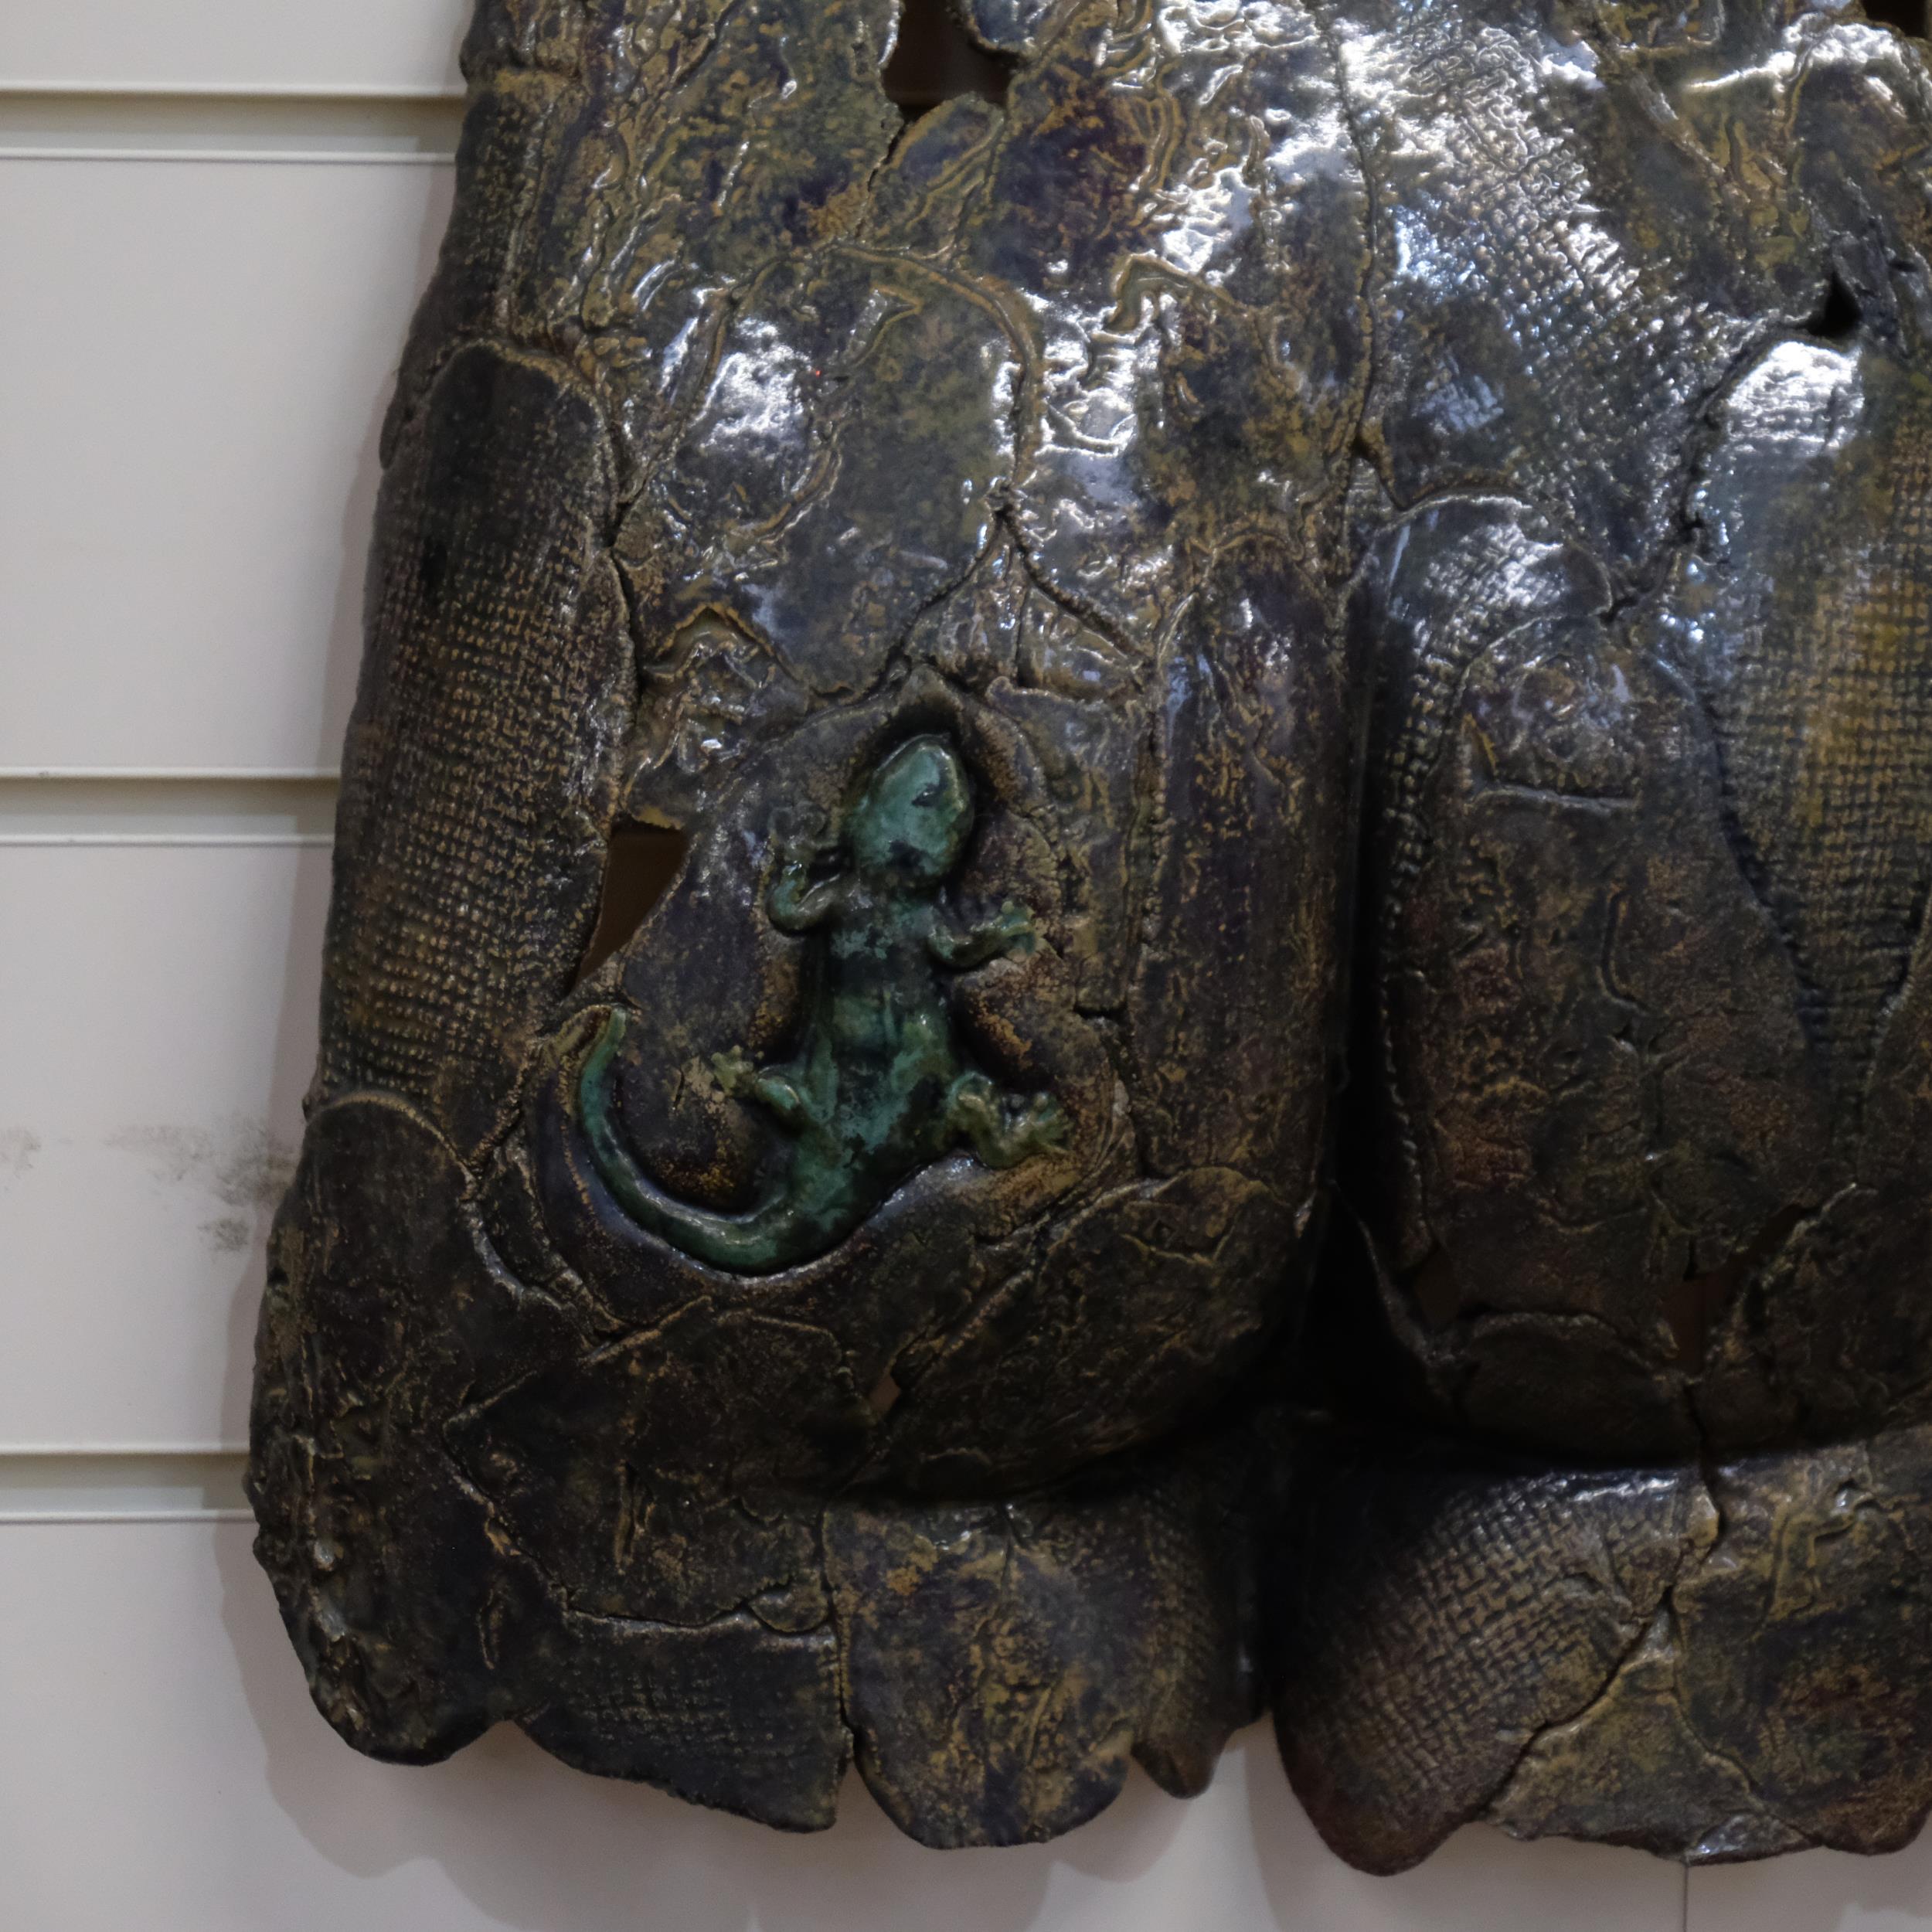 Anna Keller "cheeks" sculpture depicting buttocks with lizard design, H38cm - Image 2 of 2